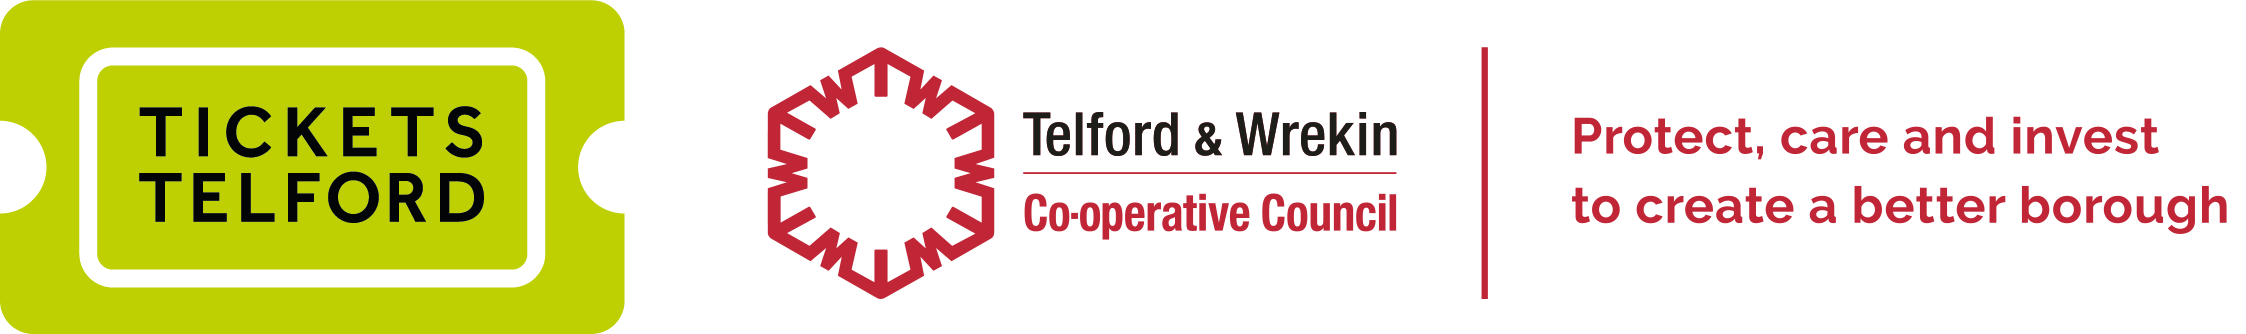 Ticket Telford logo